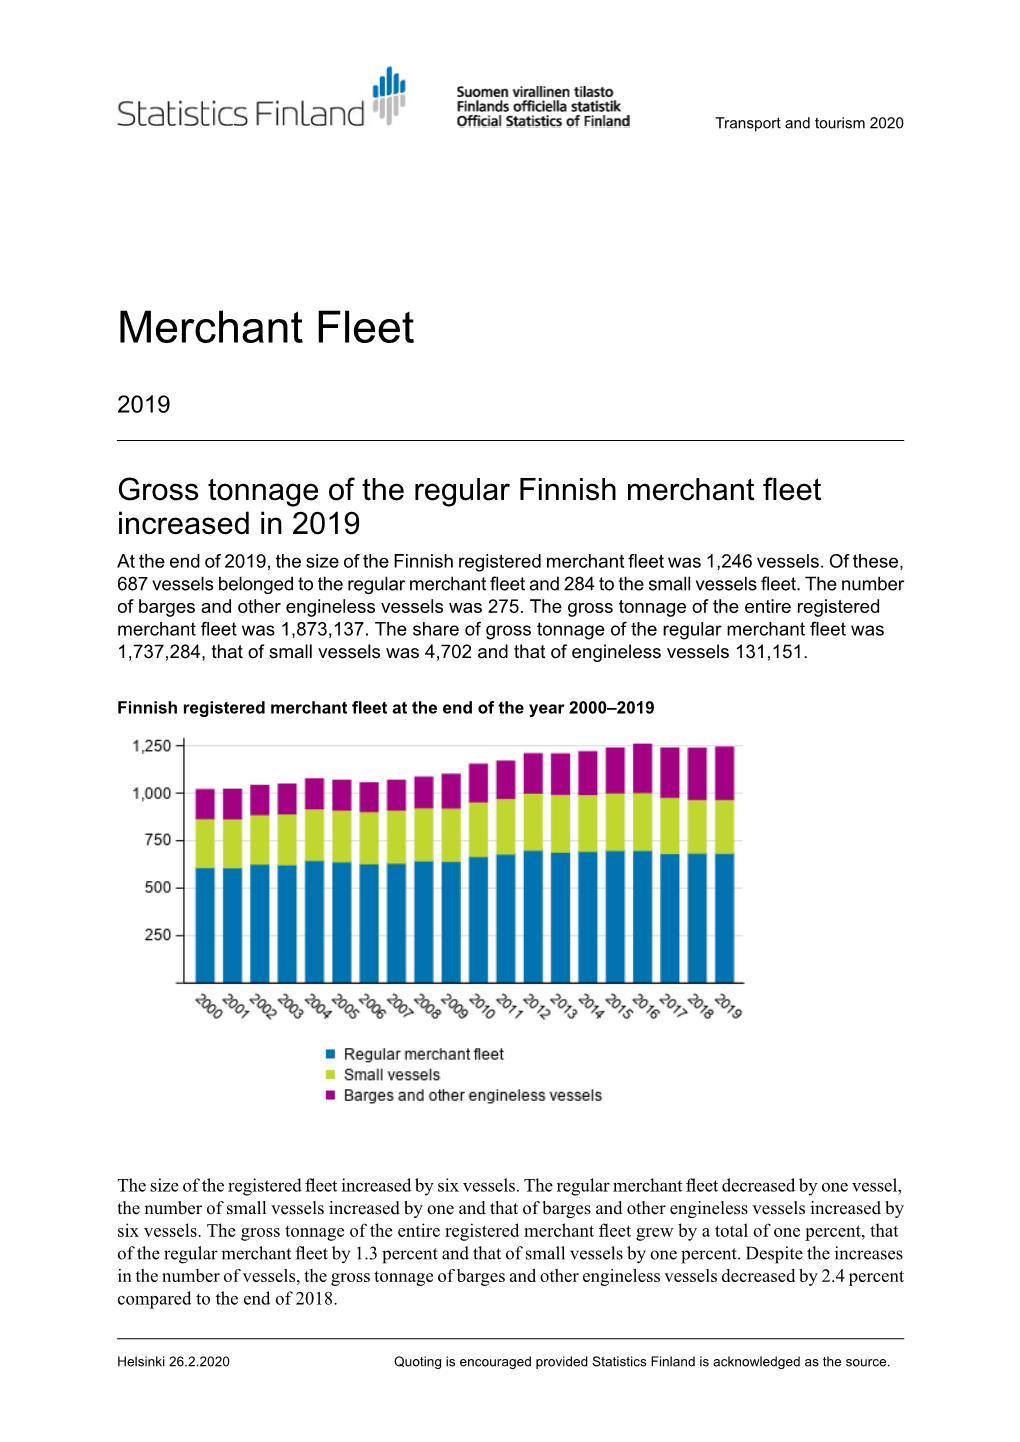 Merchant Fleet 2019